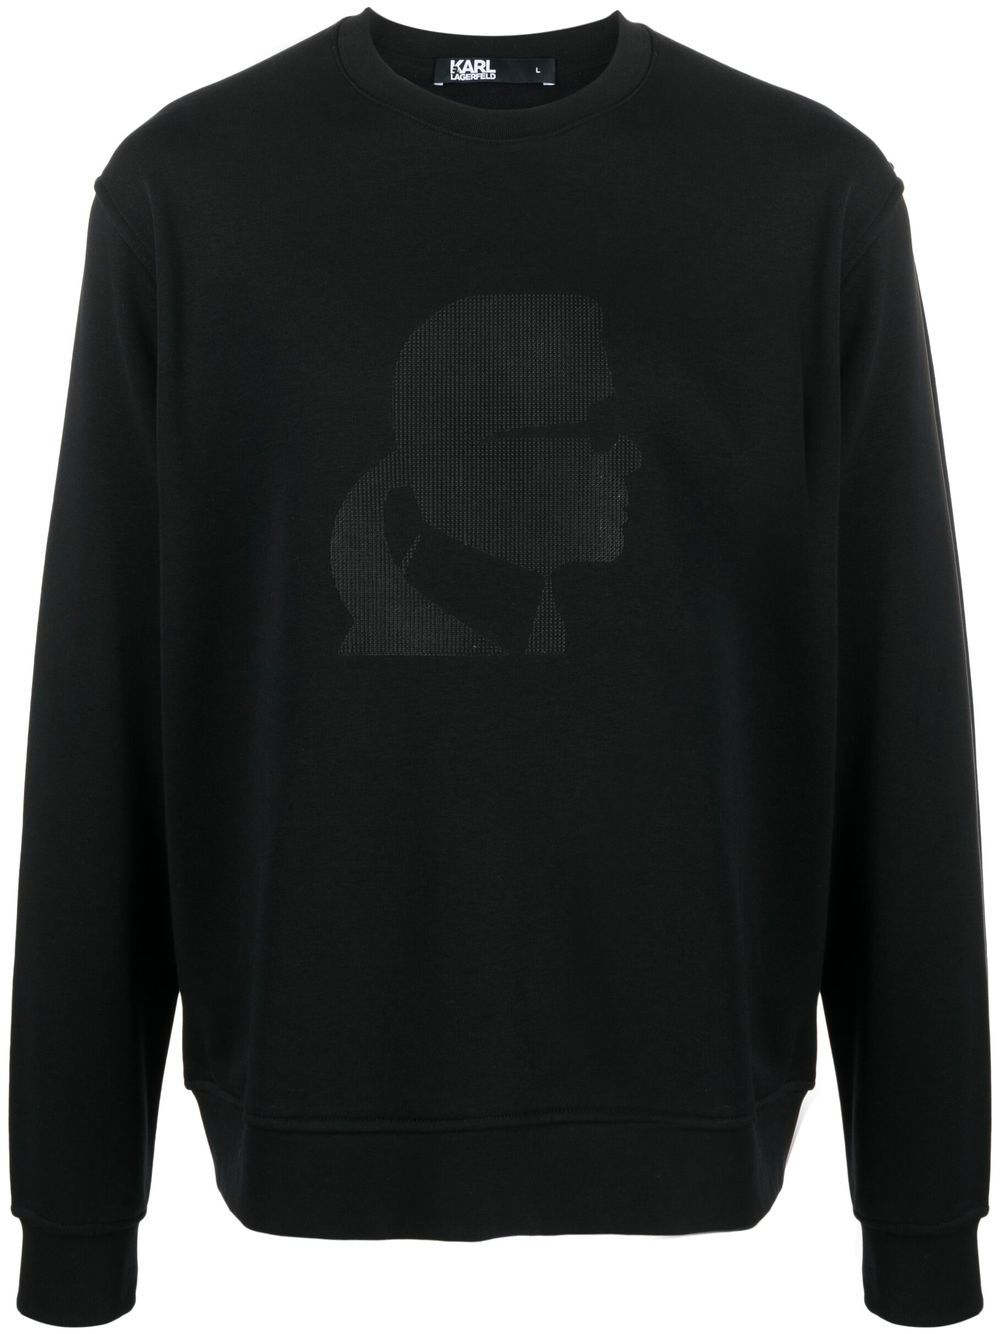 Karl-print sweatshirt